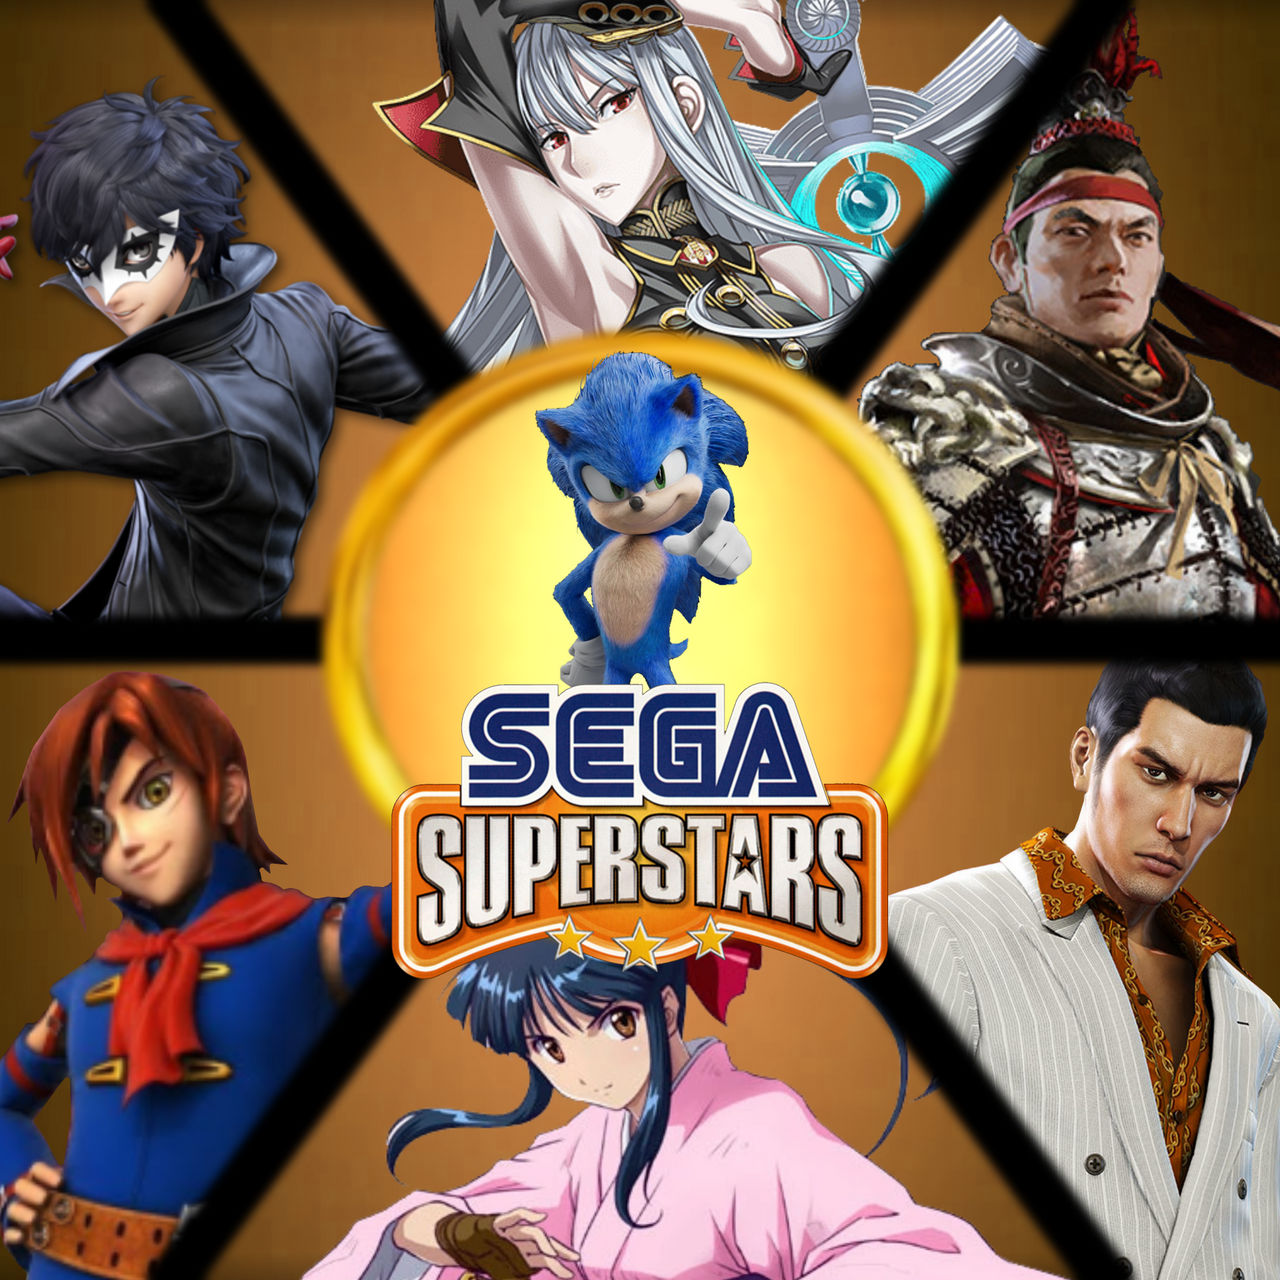 Sega Superstars by StarCaliburn on DeviantArt